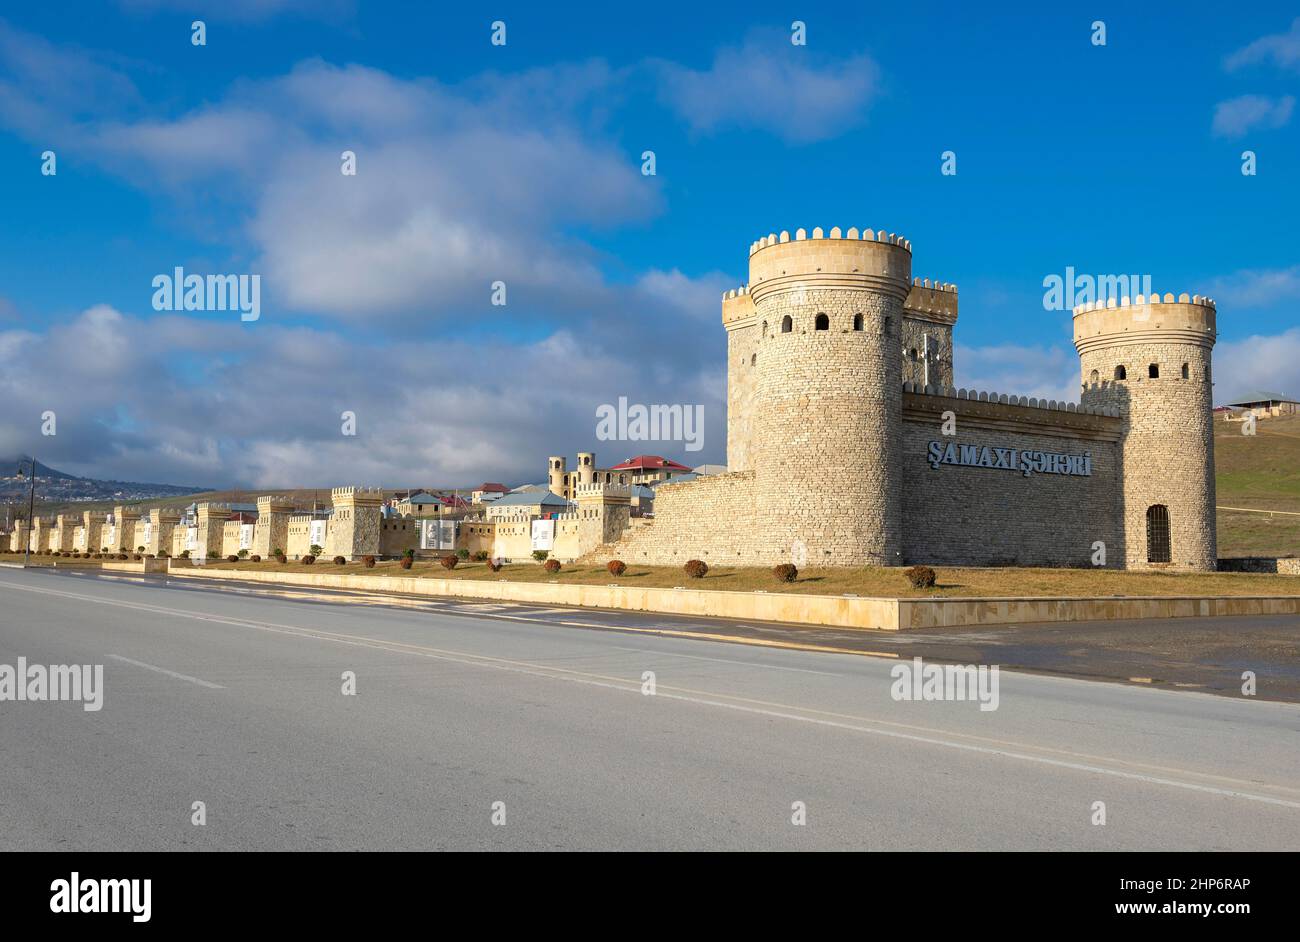 SHAMAKHI, AZERBAIGIAN - 01 GENNAIO 2018: L'antica fortezza restaurata della città di Shamakhi, giorno di gennaio. Azerbaigian Foto Stock